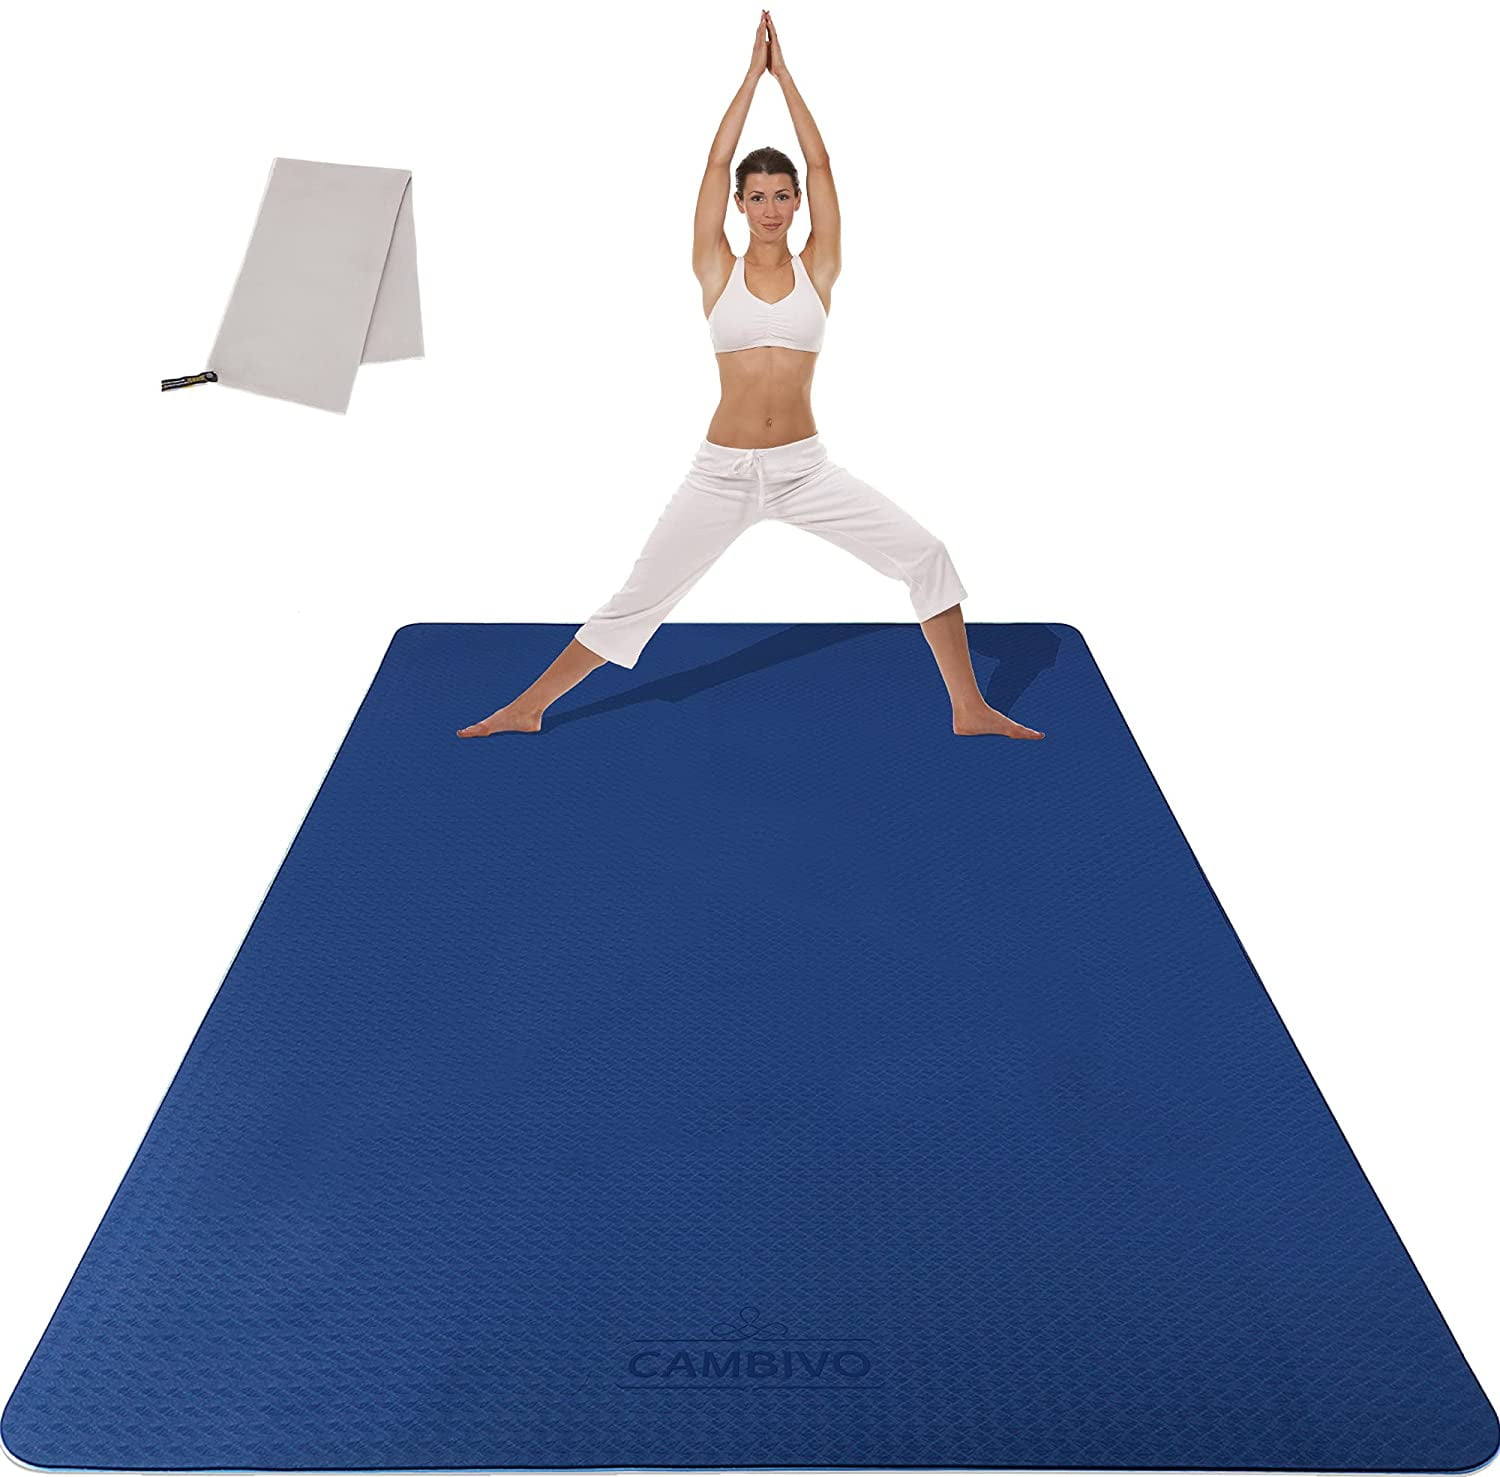 Details about   4mm 60x172cm Yoga Mat Non-slip Exercise Fitness Gym Mats Pilates Training Pad 